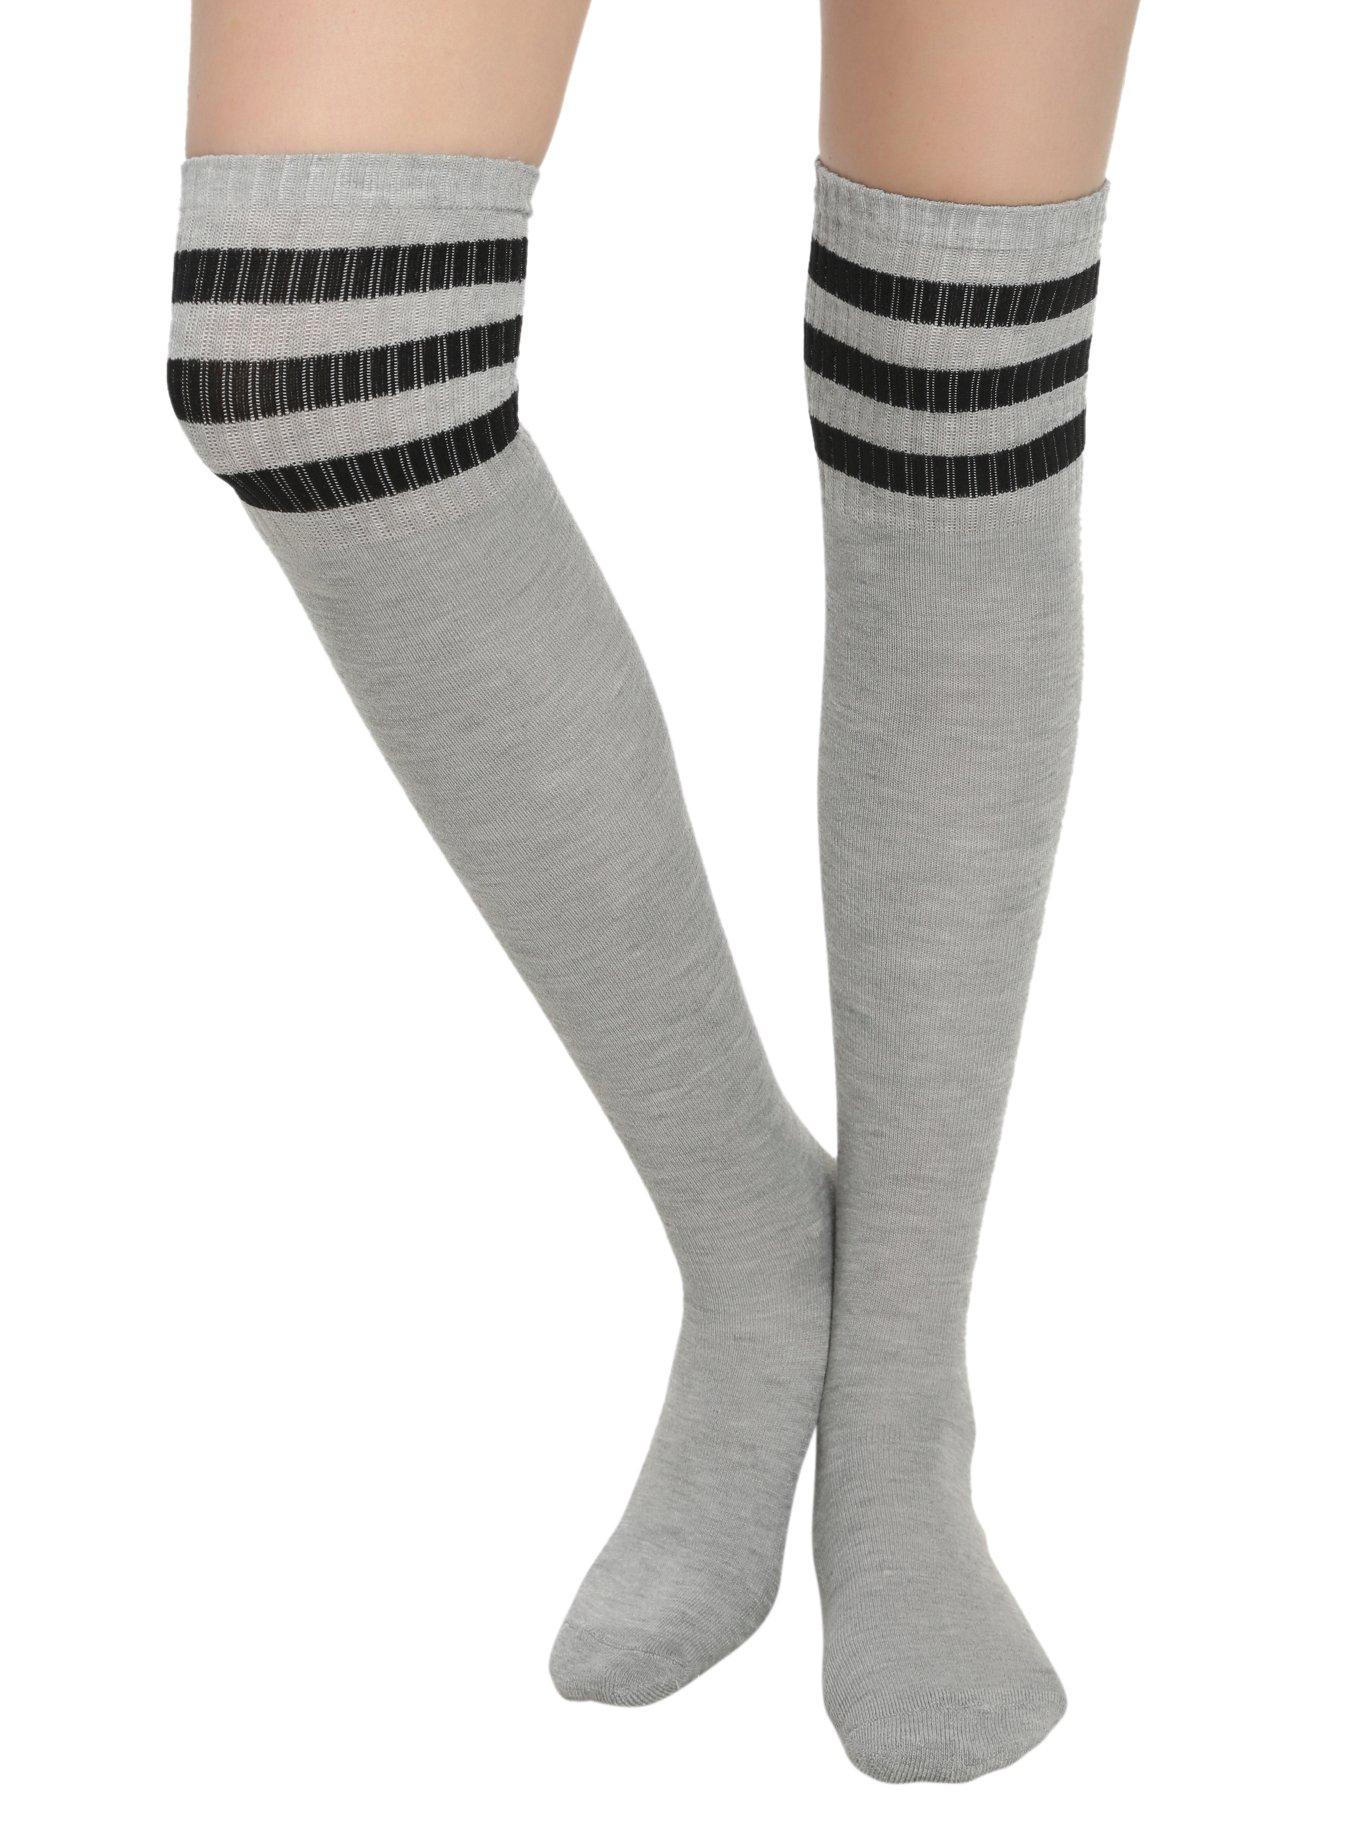 Grey & Black Striped Over-The-Knee Socks | Hot Topic